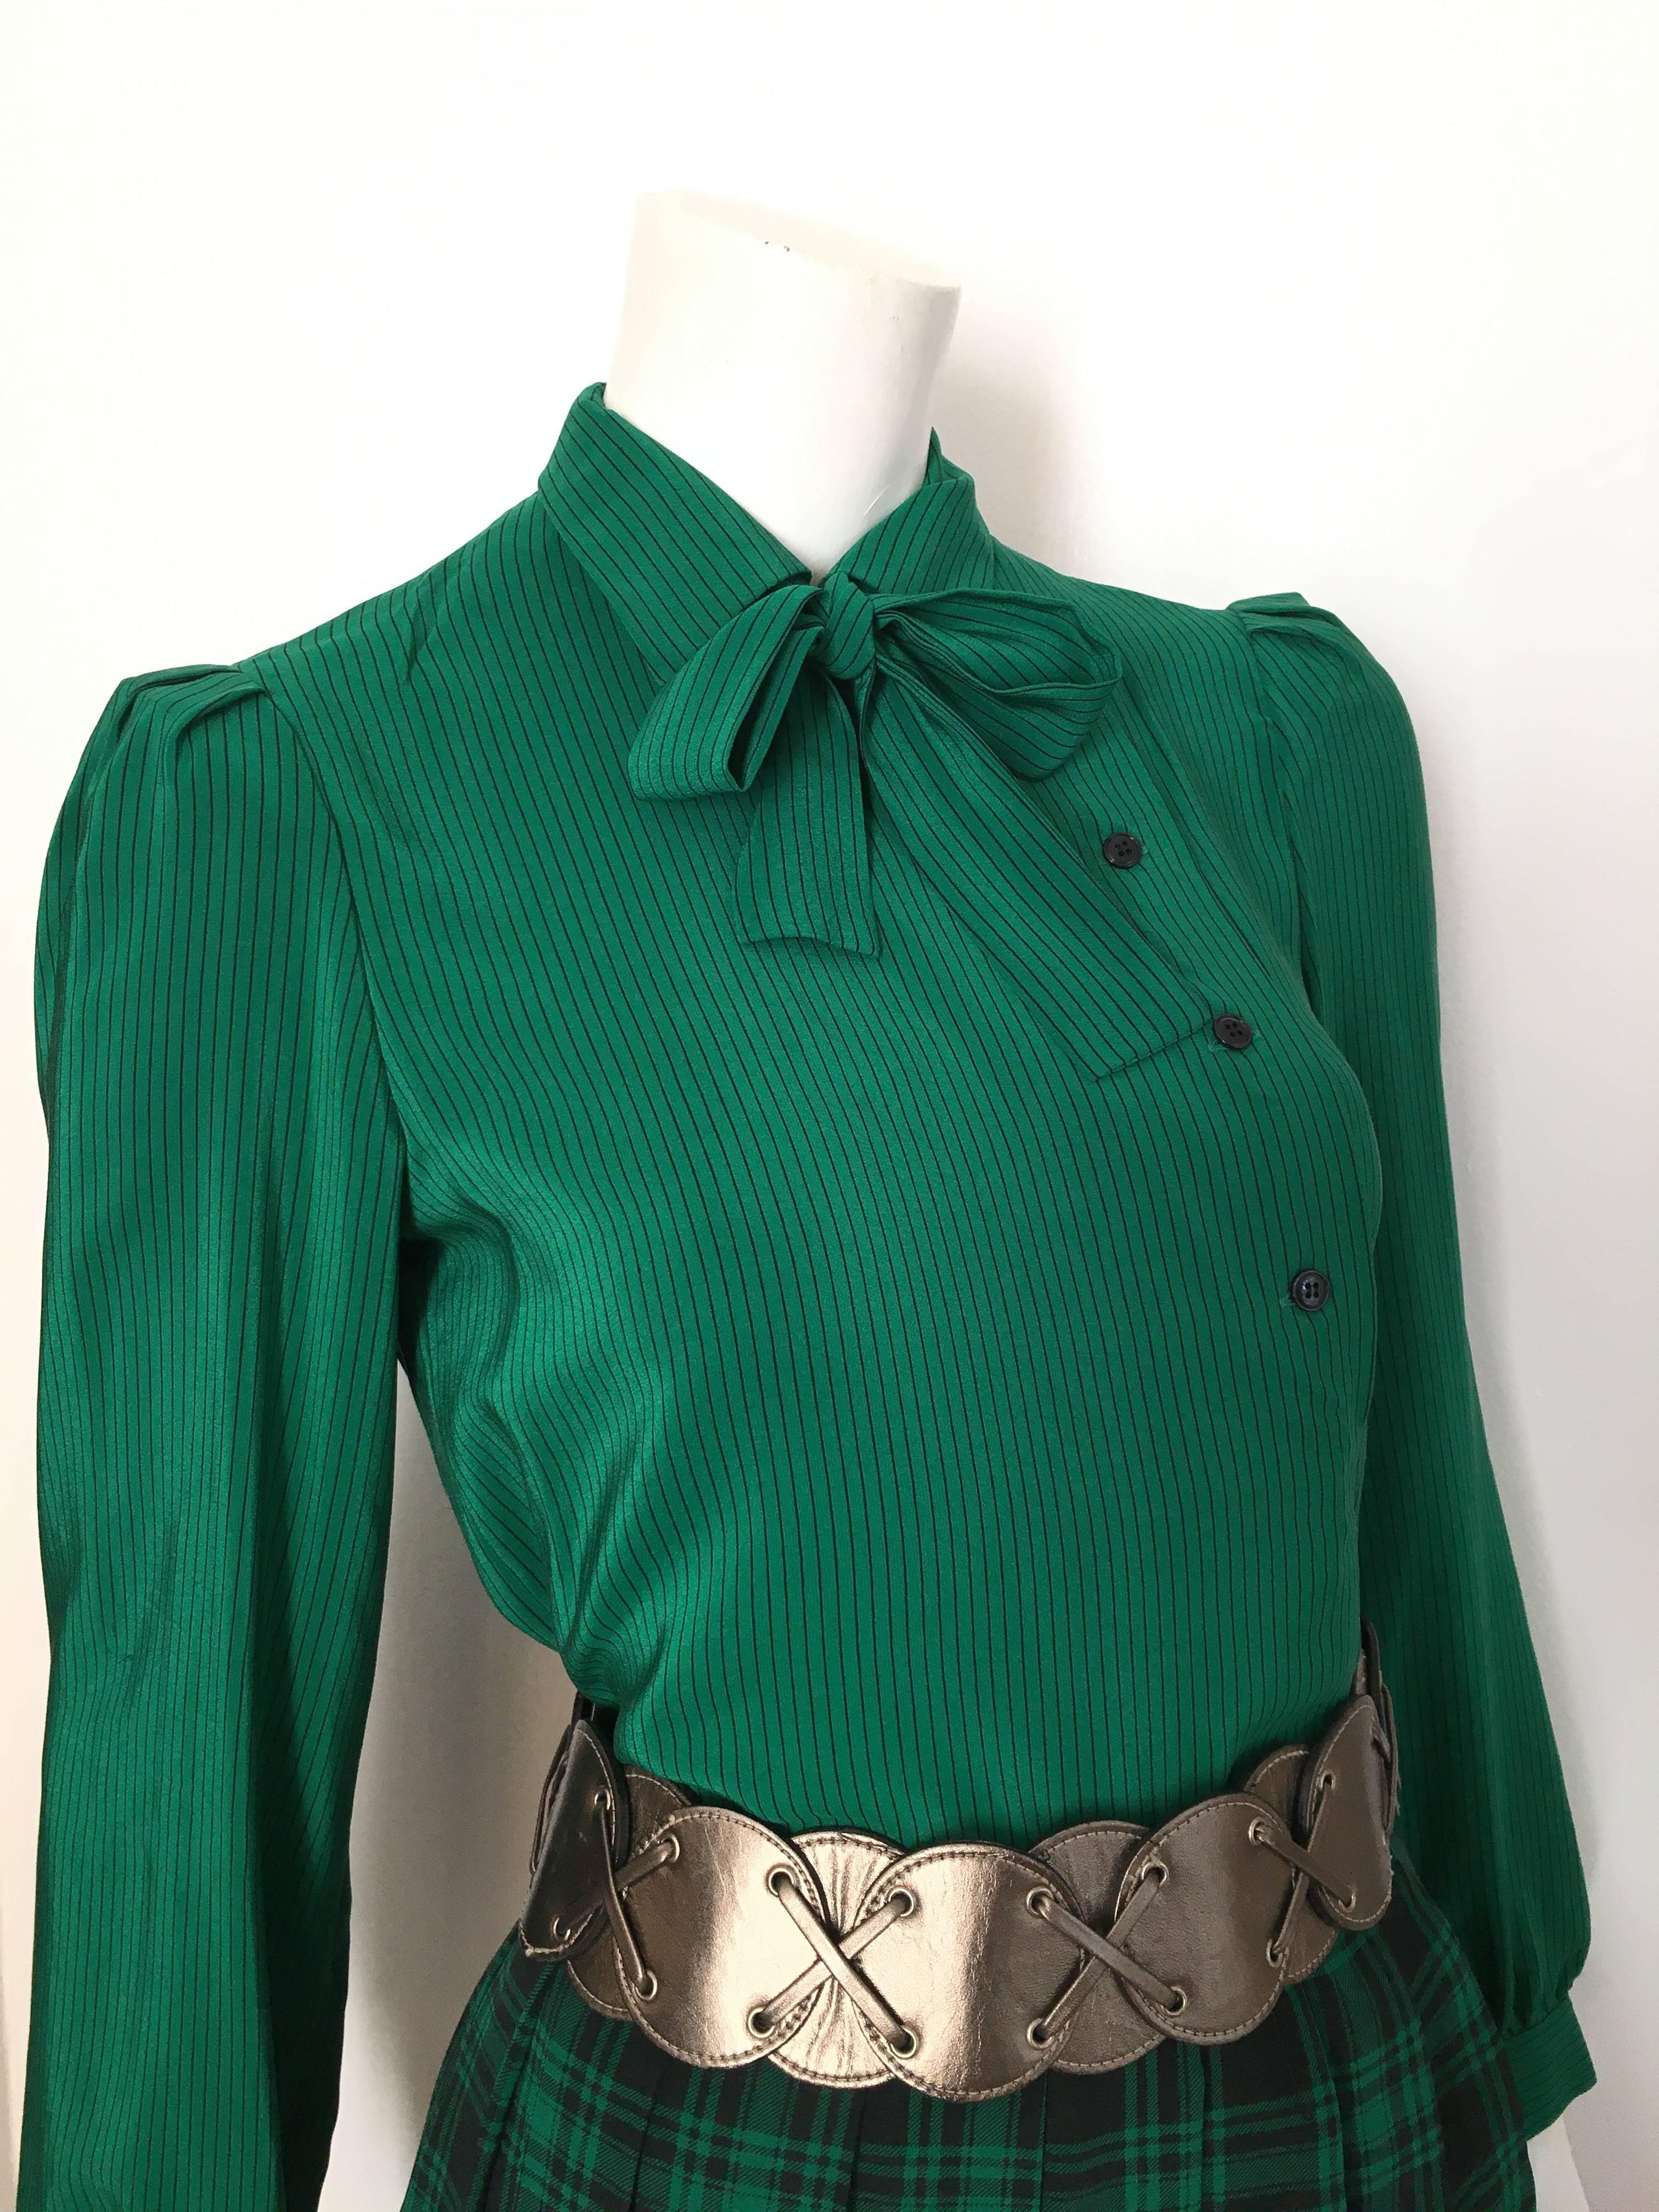 Black Oscar de la Renta 1980s Silk Striped Blouse & Plaid Pleated Skirt Size 4.